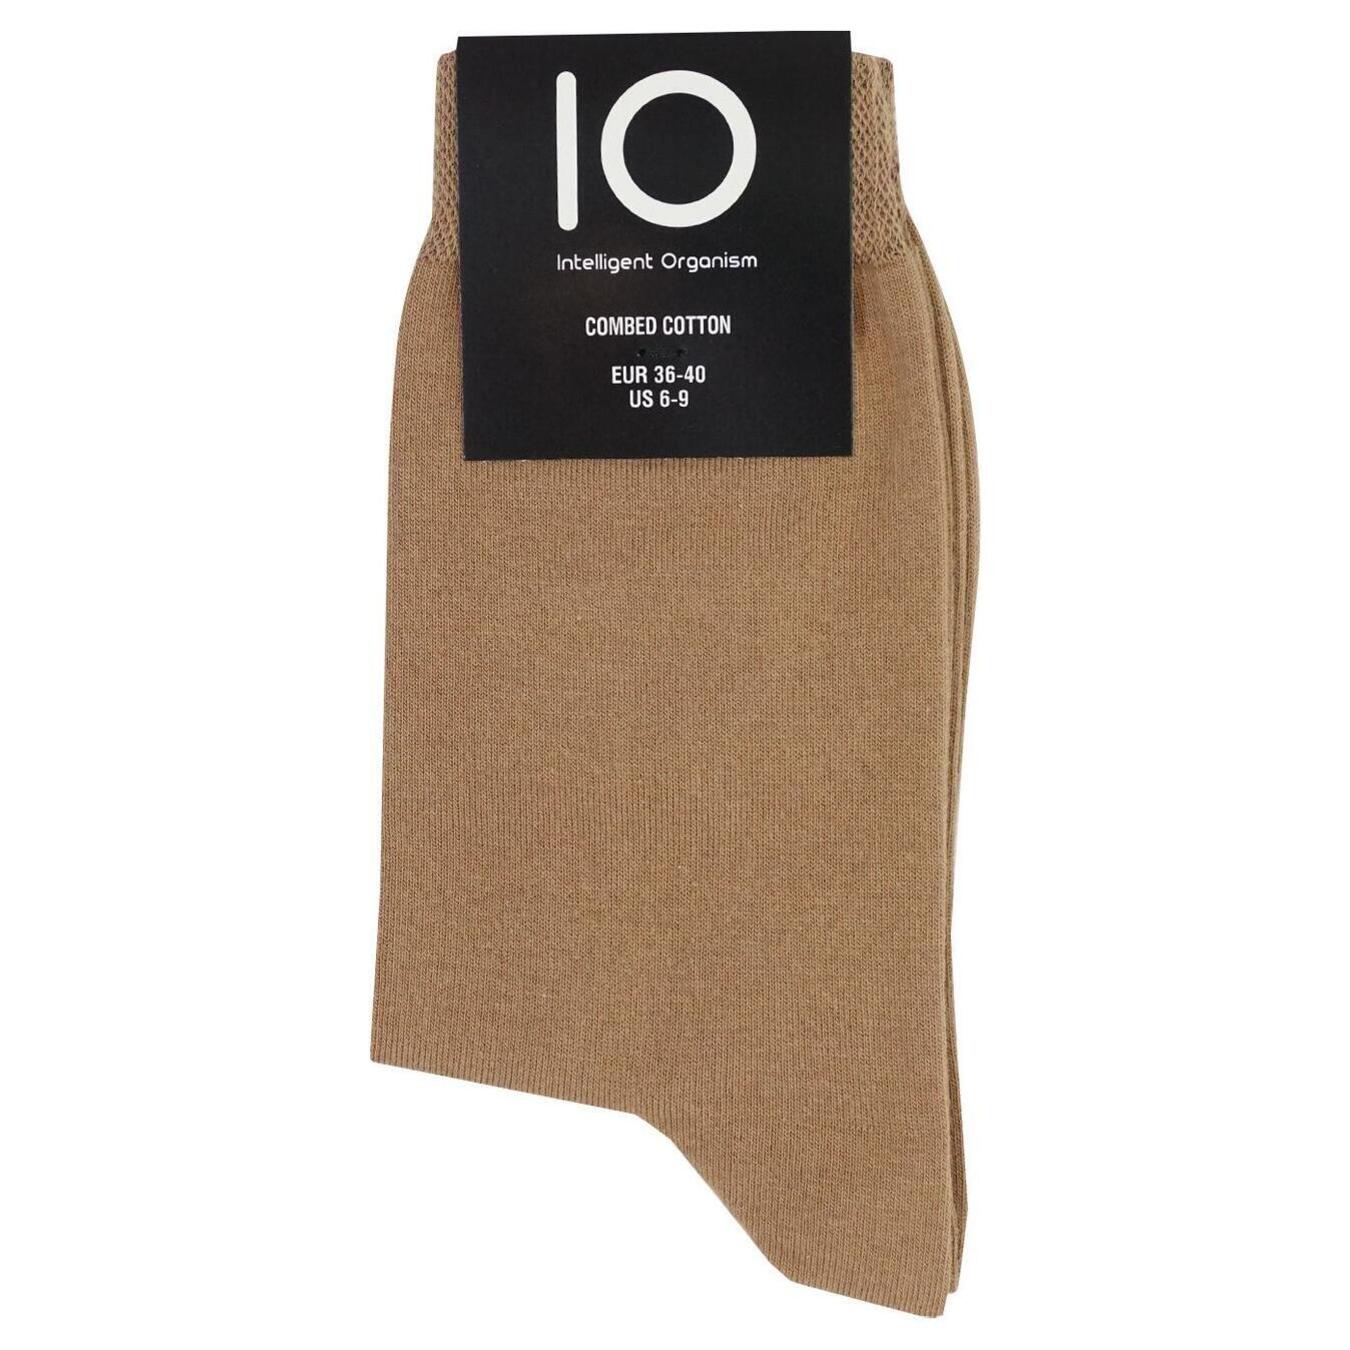 Women's IO socks, coffee color, 36-40 years old.